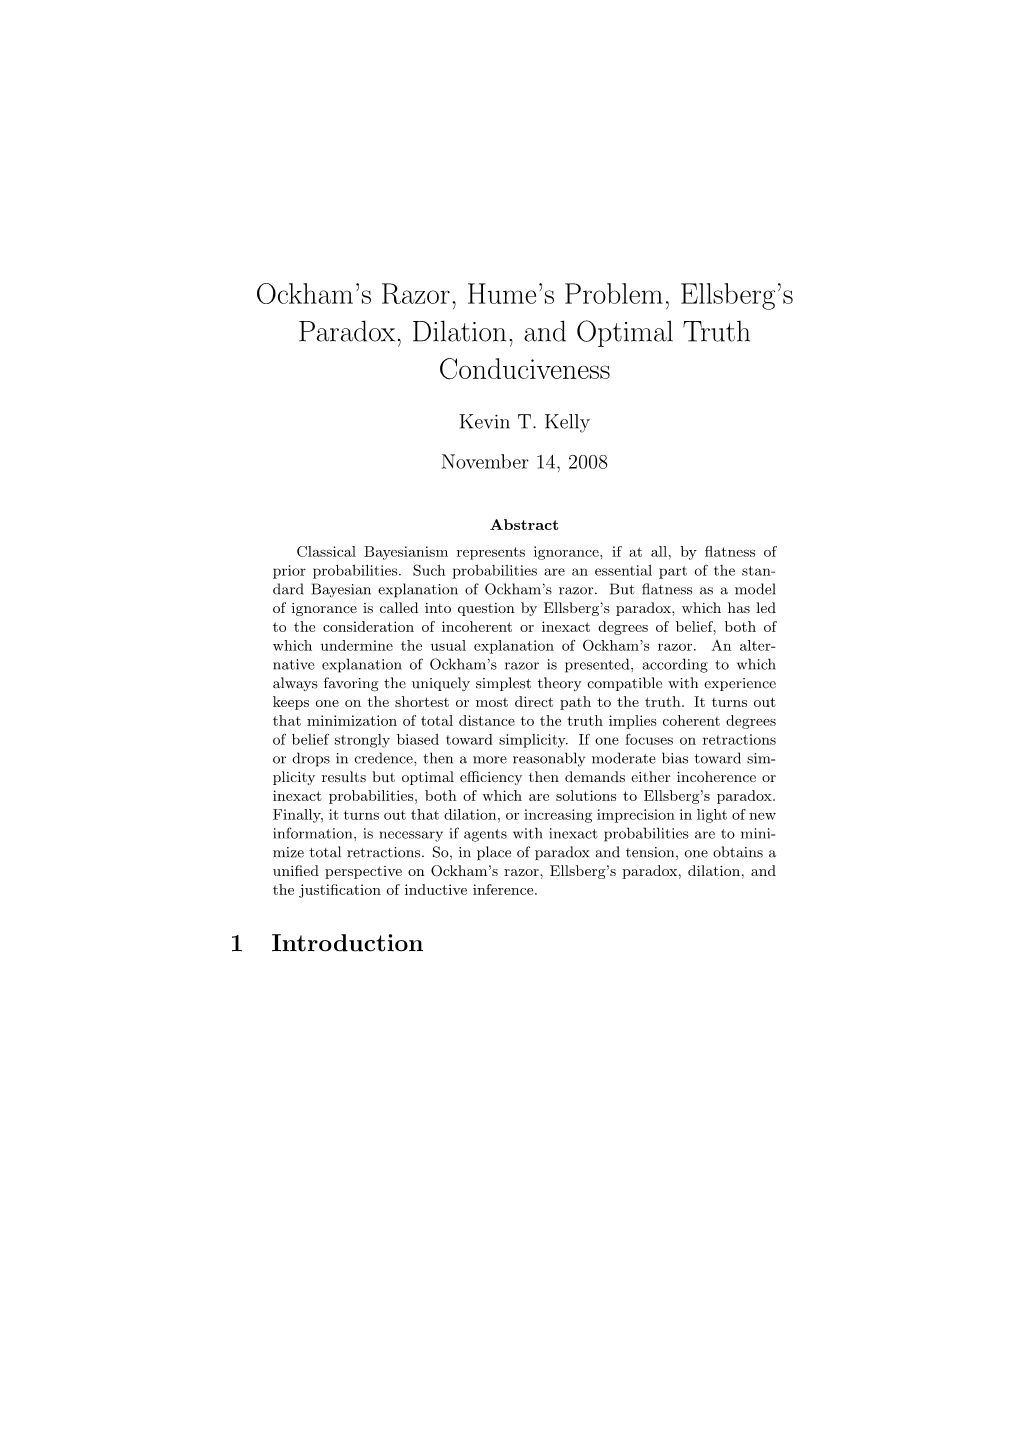 Ockham's Razor, Hume's Problem, Ellsberg's Paradox, Dilation, And